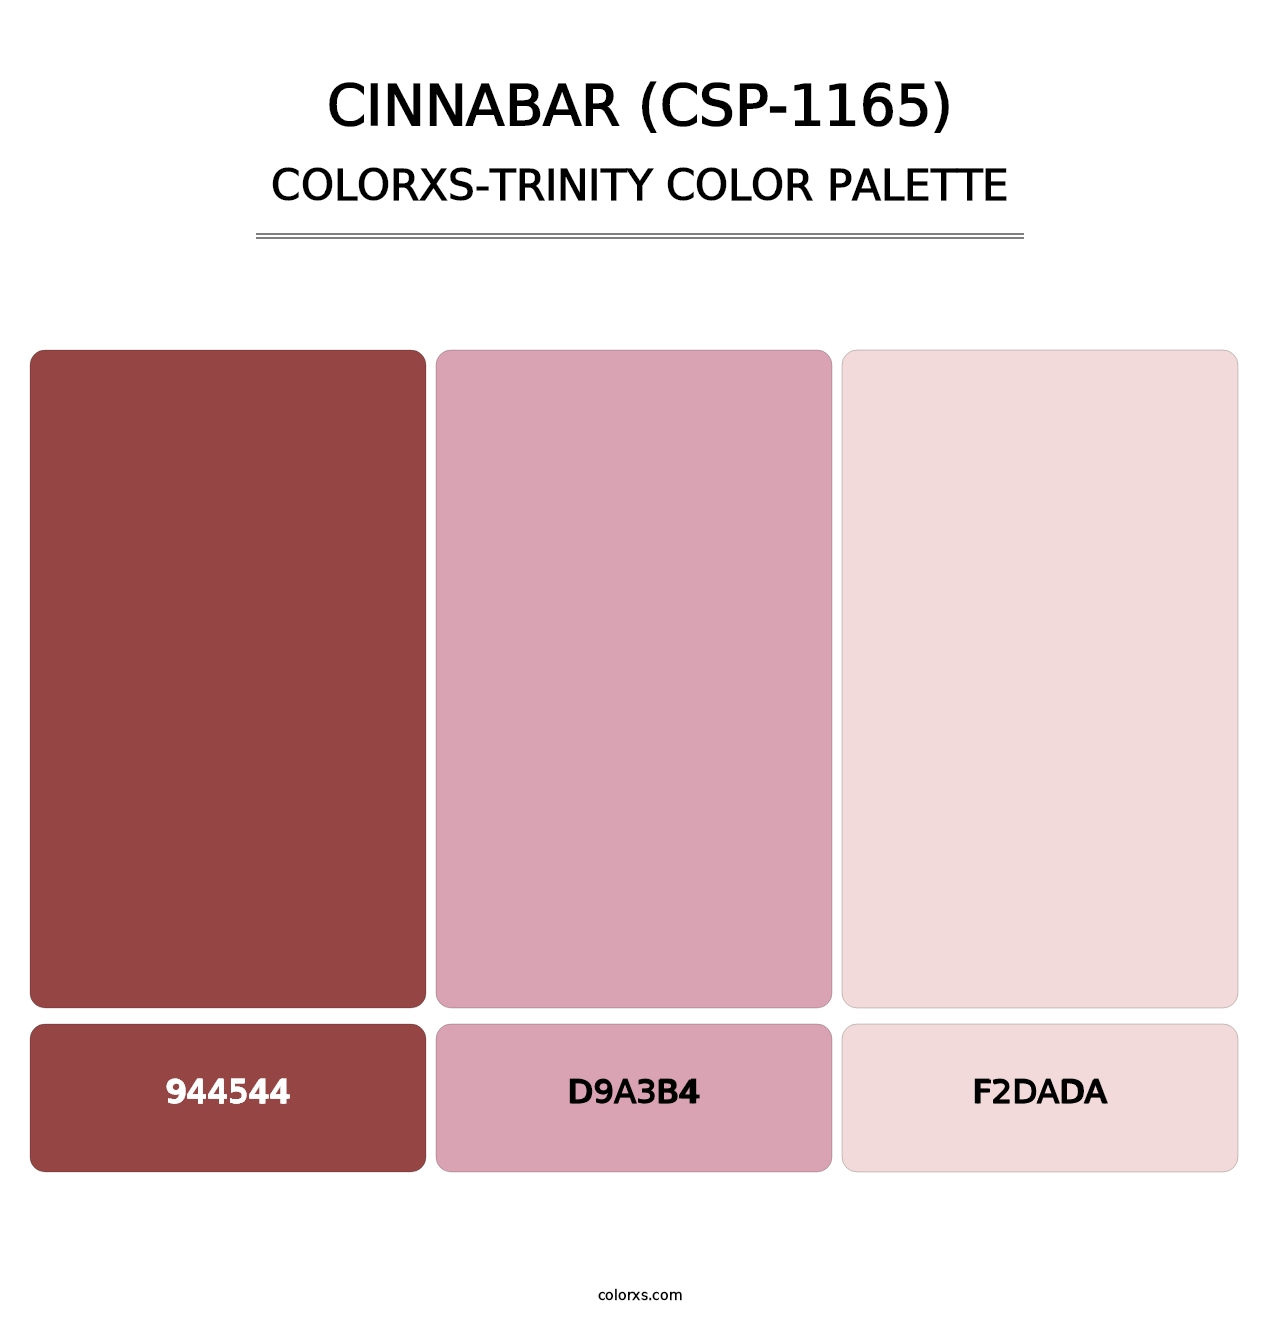 Cinnabar (CSP-1165) - Colorxs Trinity Palette